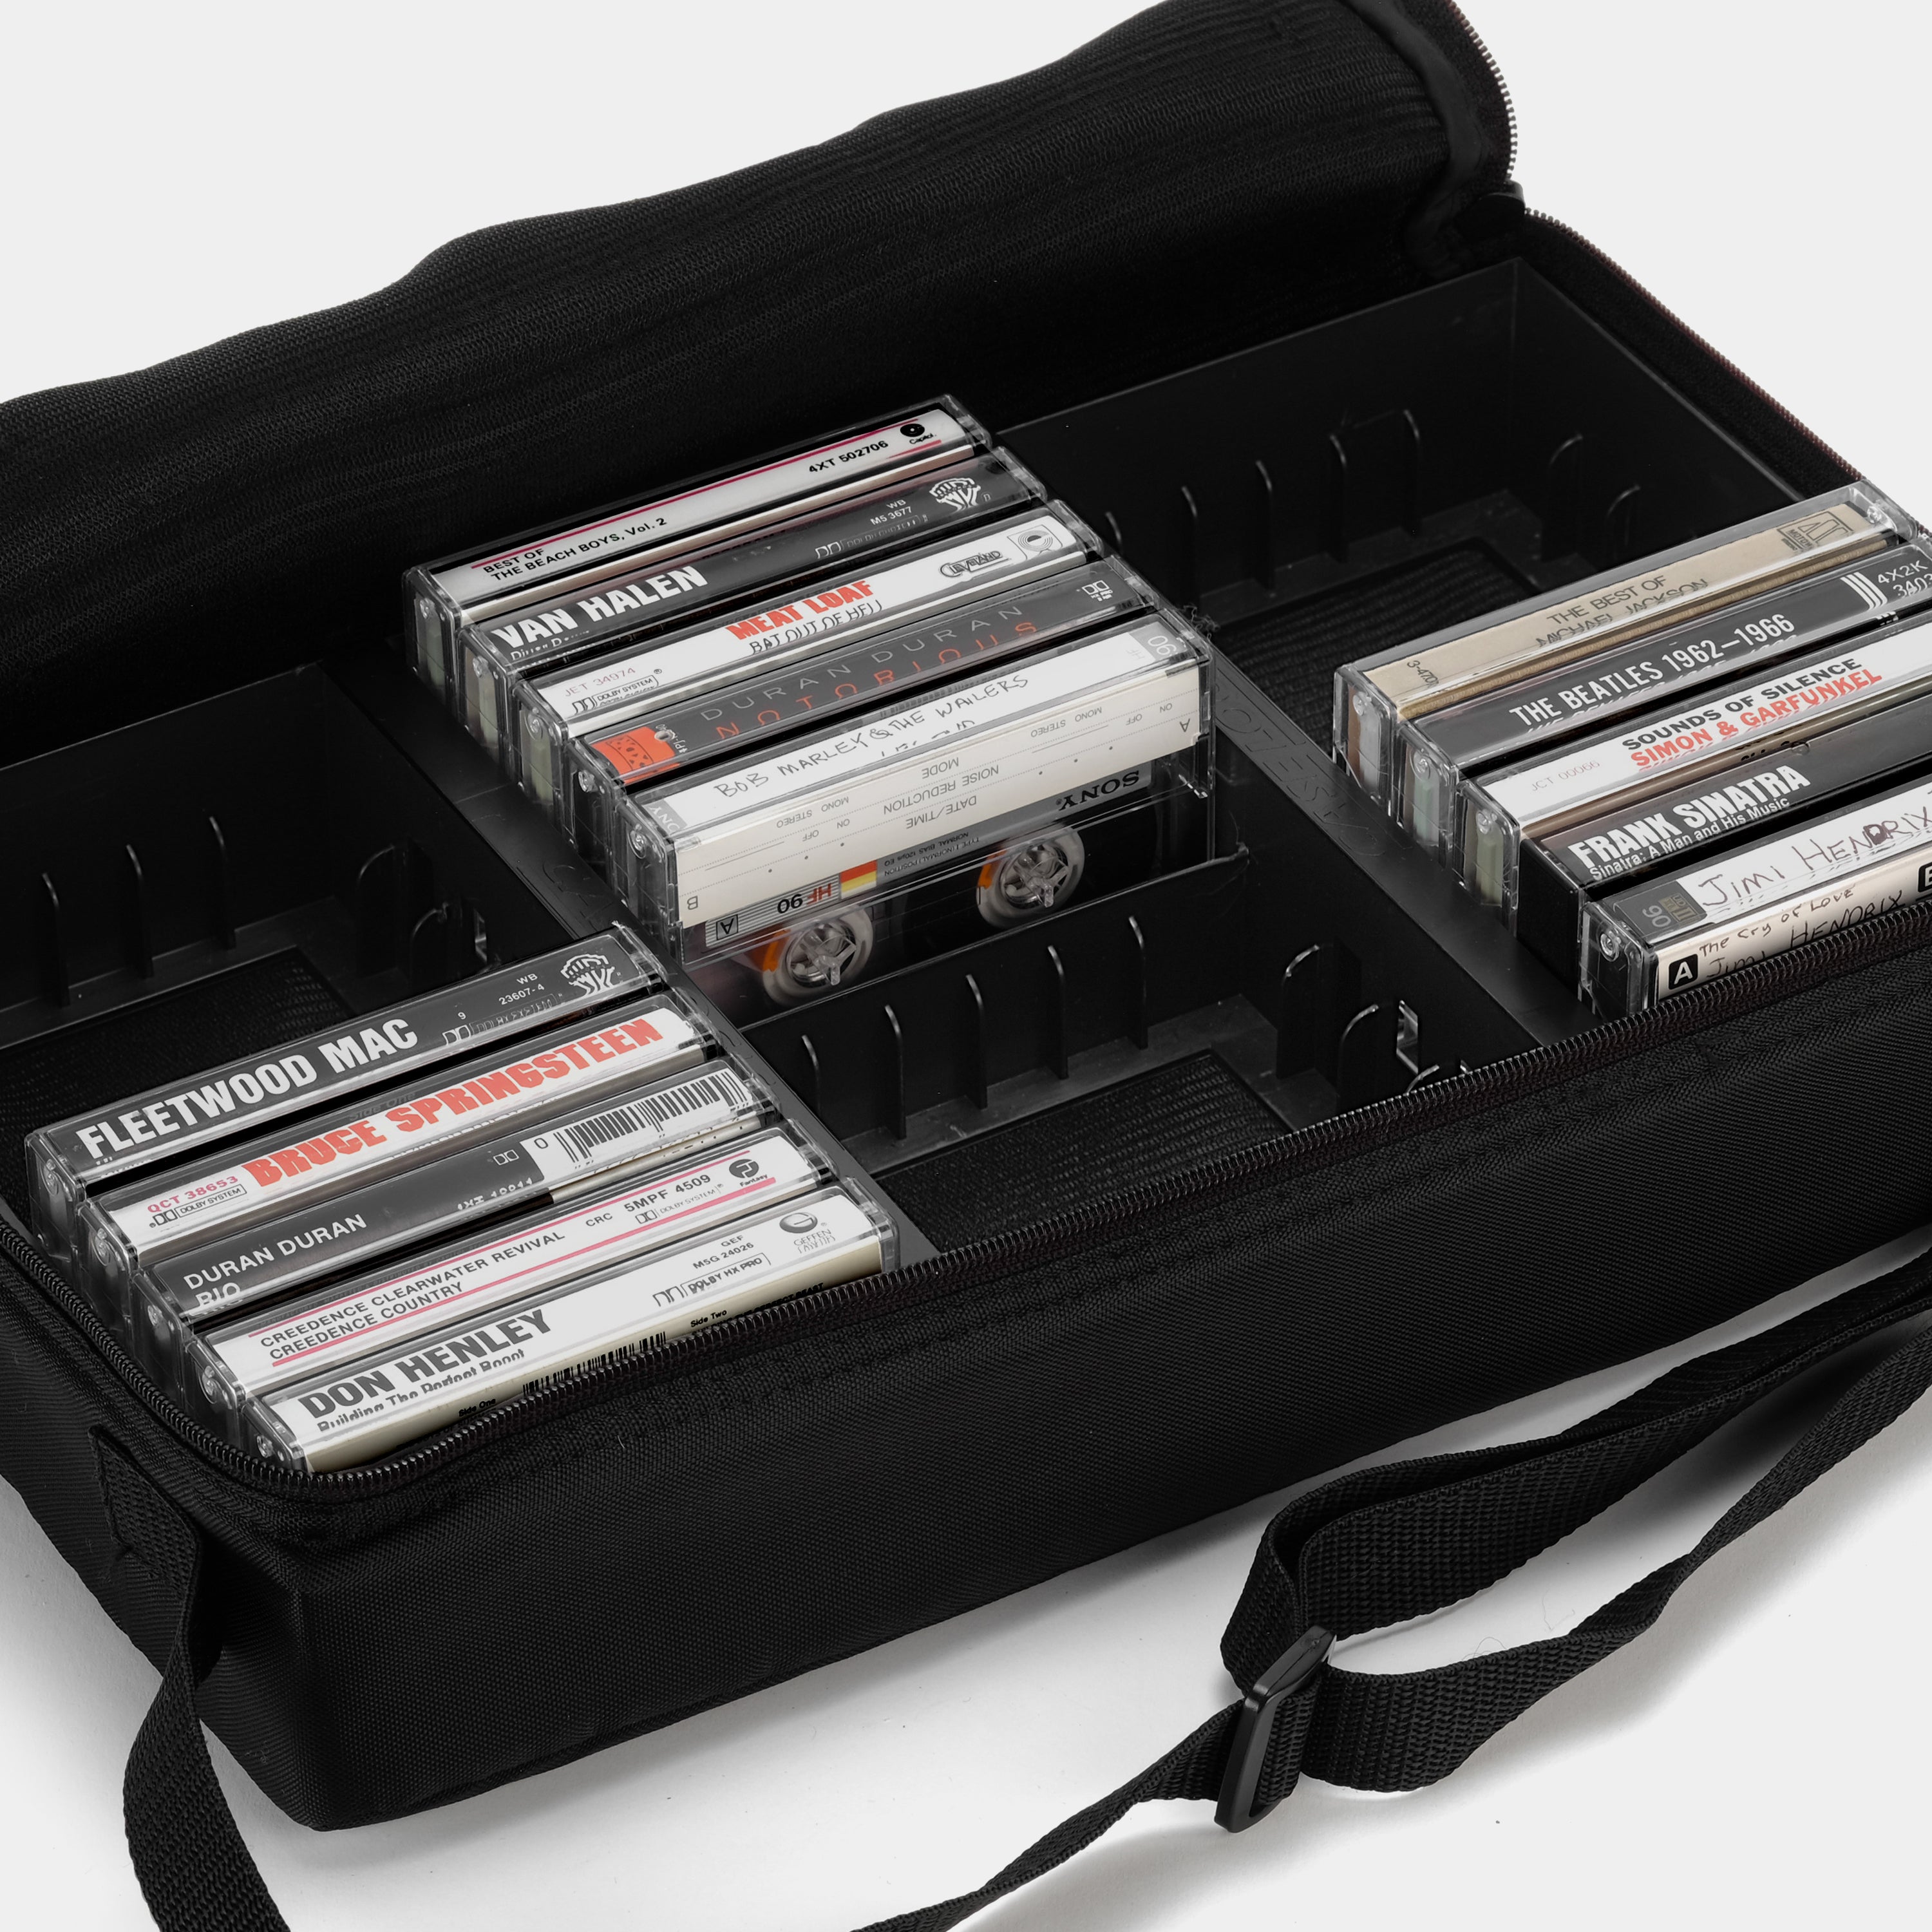 Case Logic Cassette Tape Storage Case